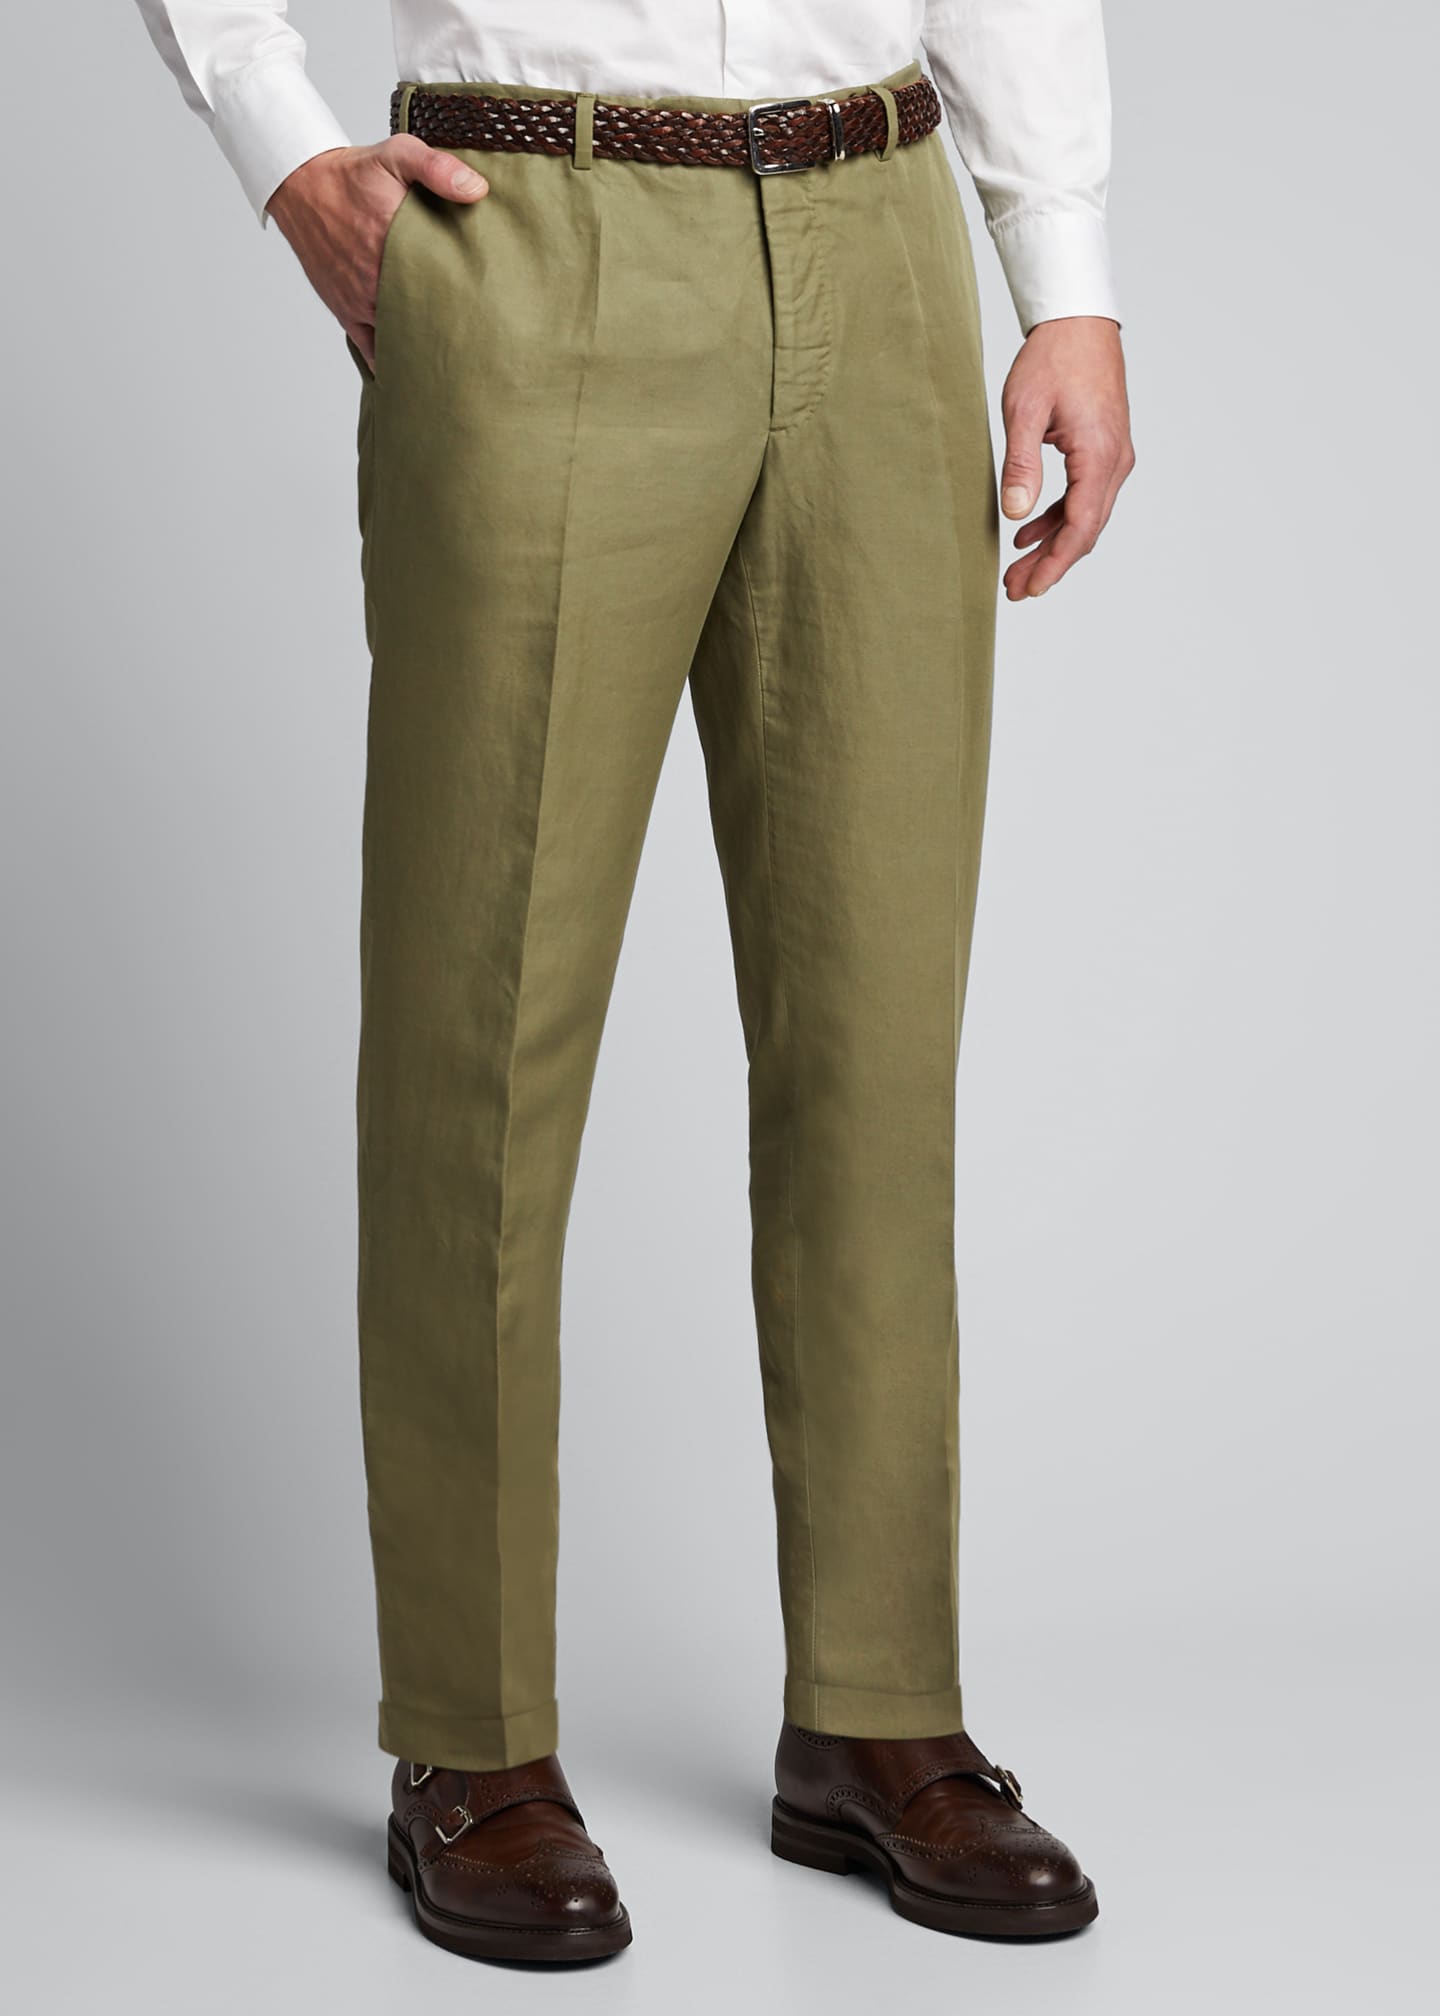 Incotex Men's Linen-Blend Chino Pants - Bergdorf Goodman